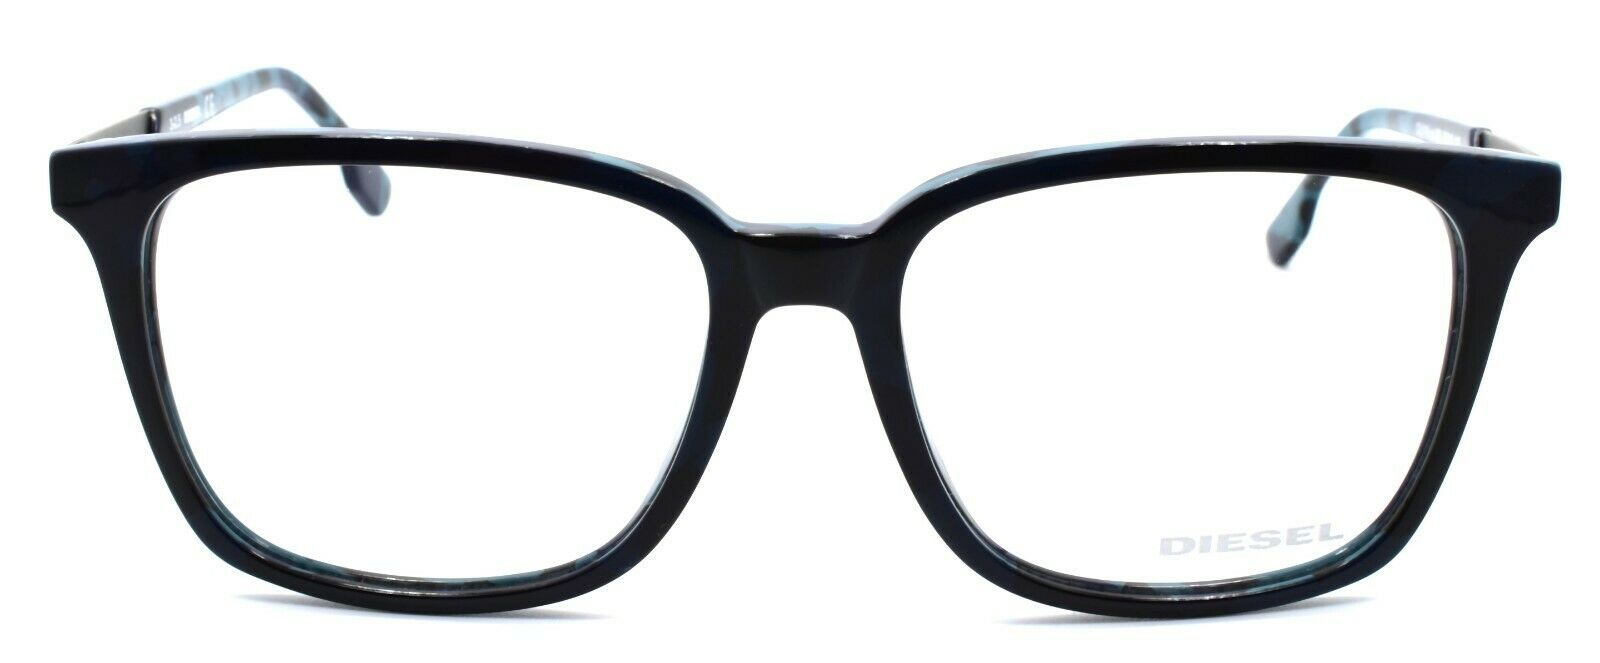 2-Diesel DL5116 092 Unisex Eyeglasses Frames 53-16-145 Green Blue Camouflage-664689645725-IKSpecs